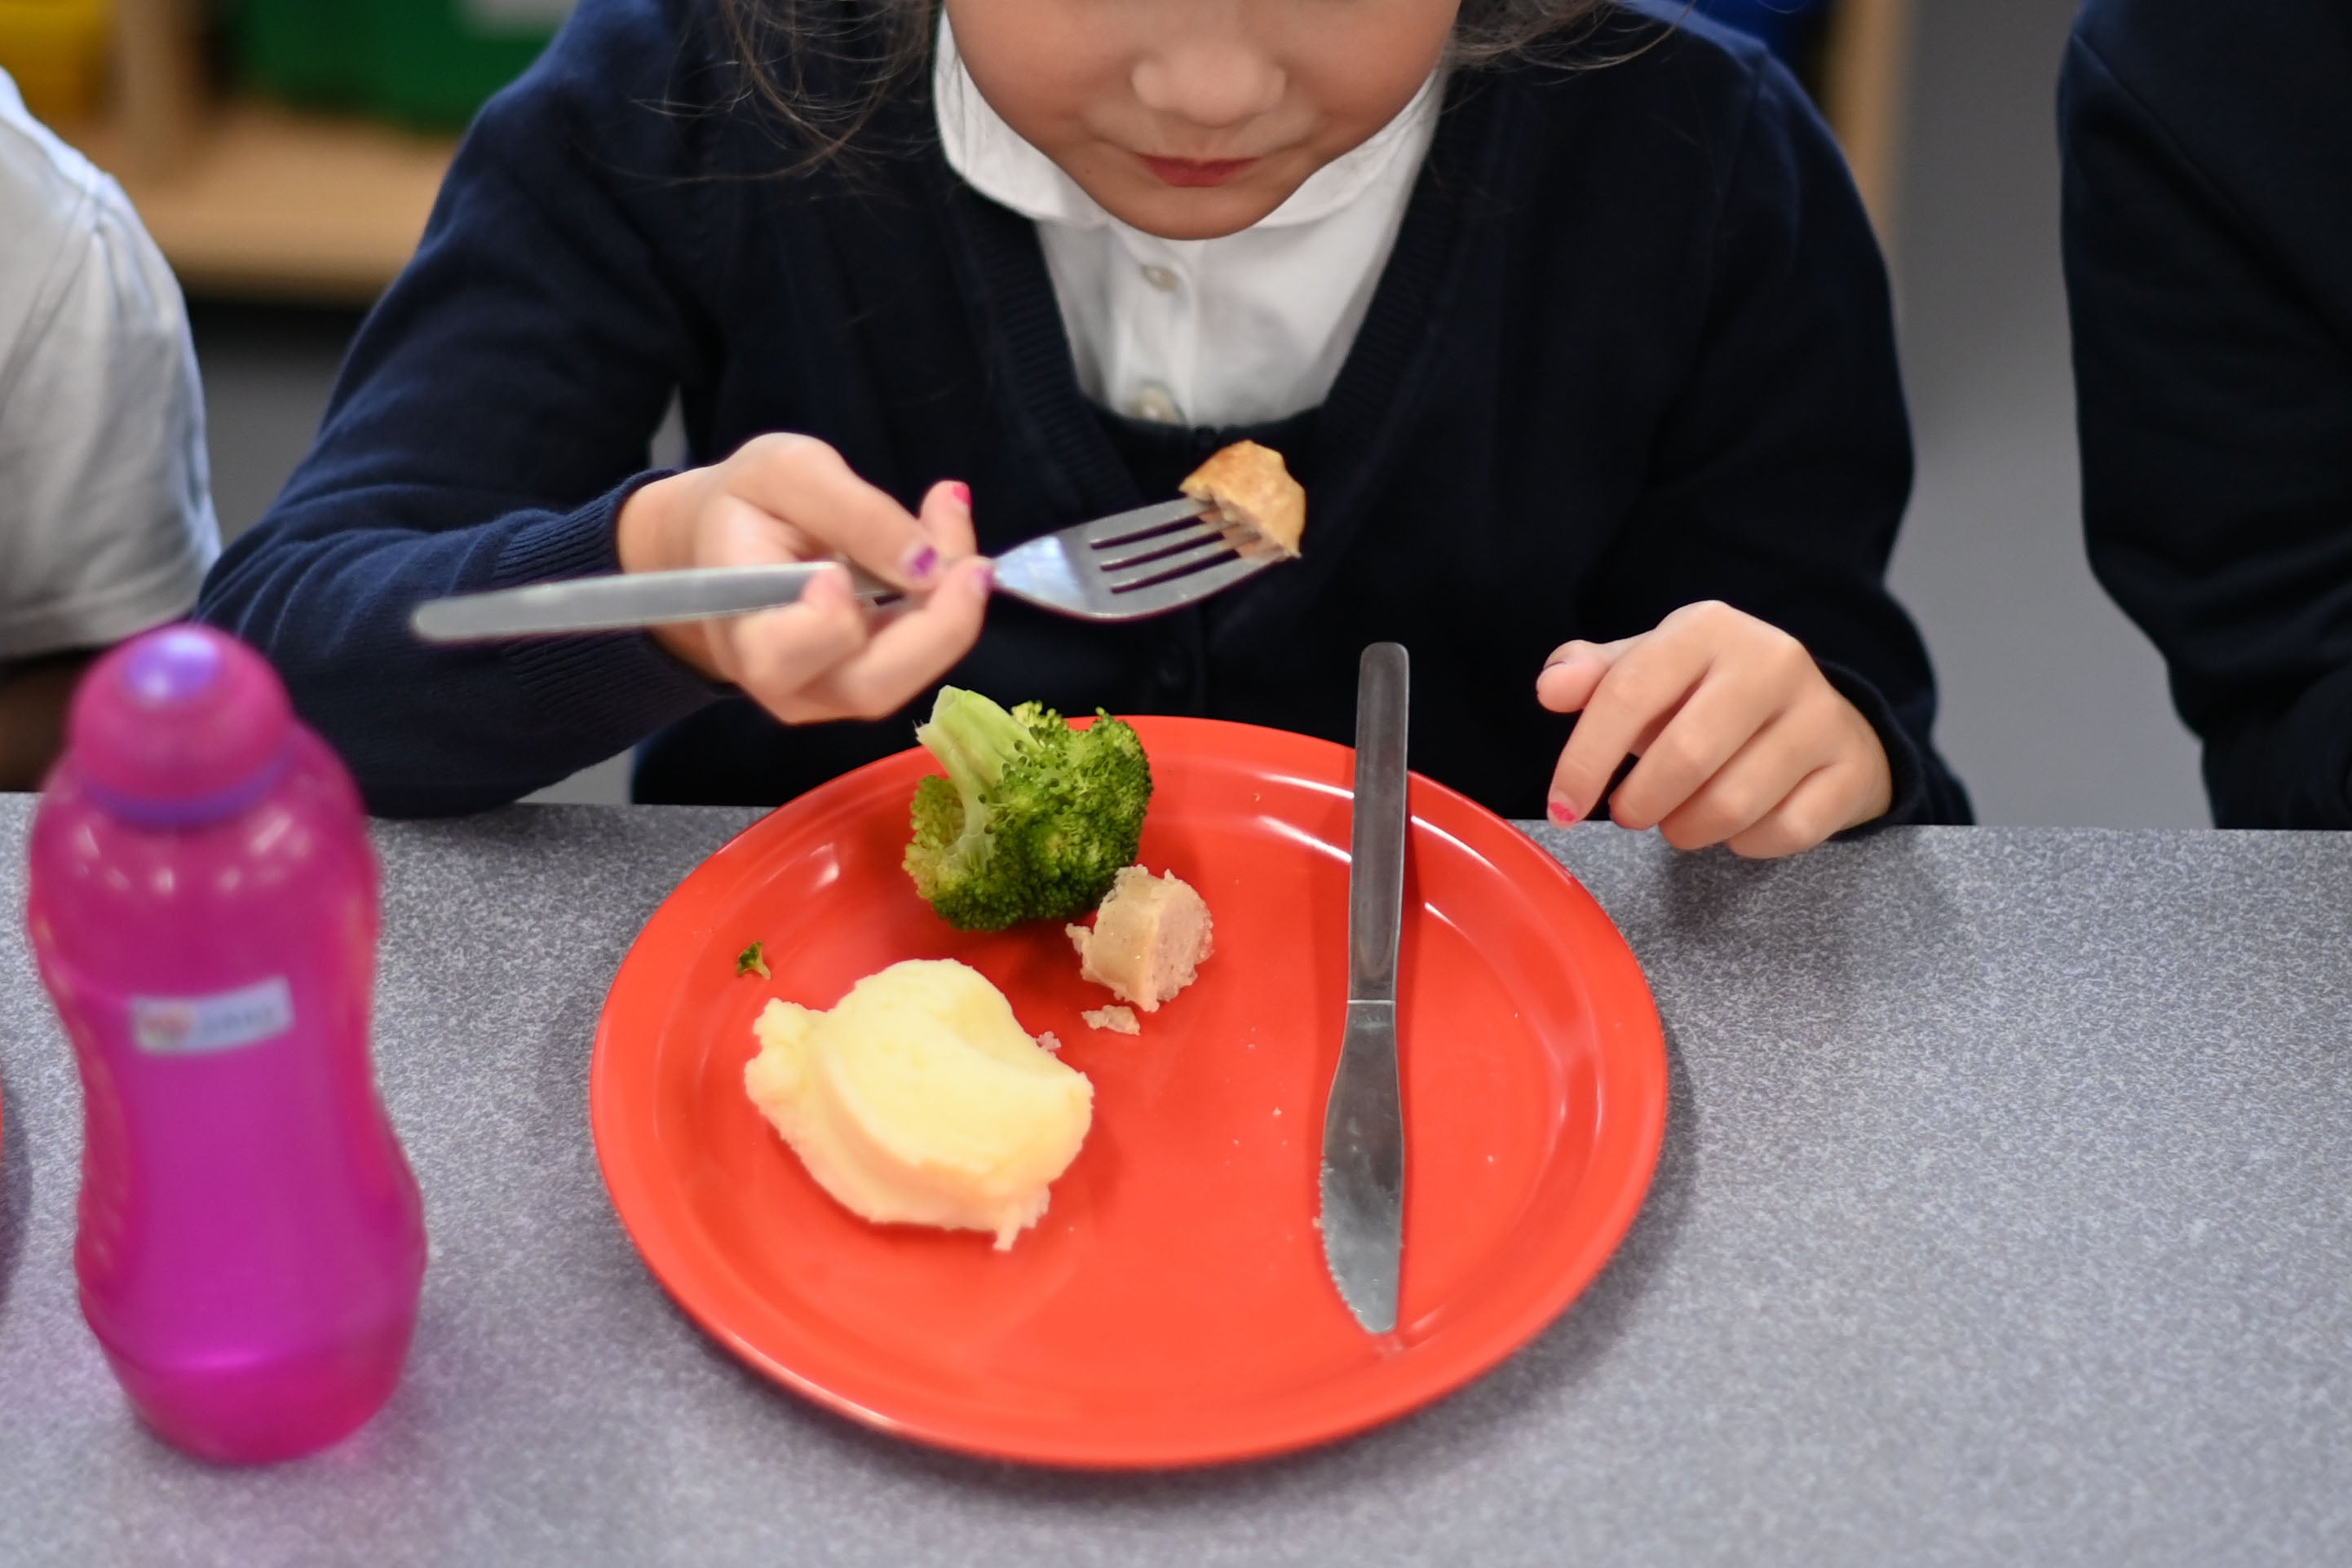 ‘Total disregard’: Schools told not to provide free meals over half term